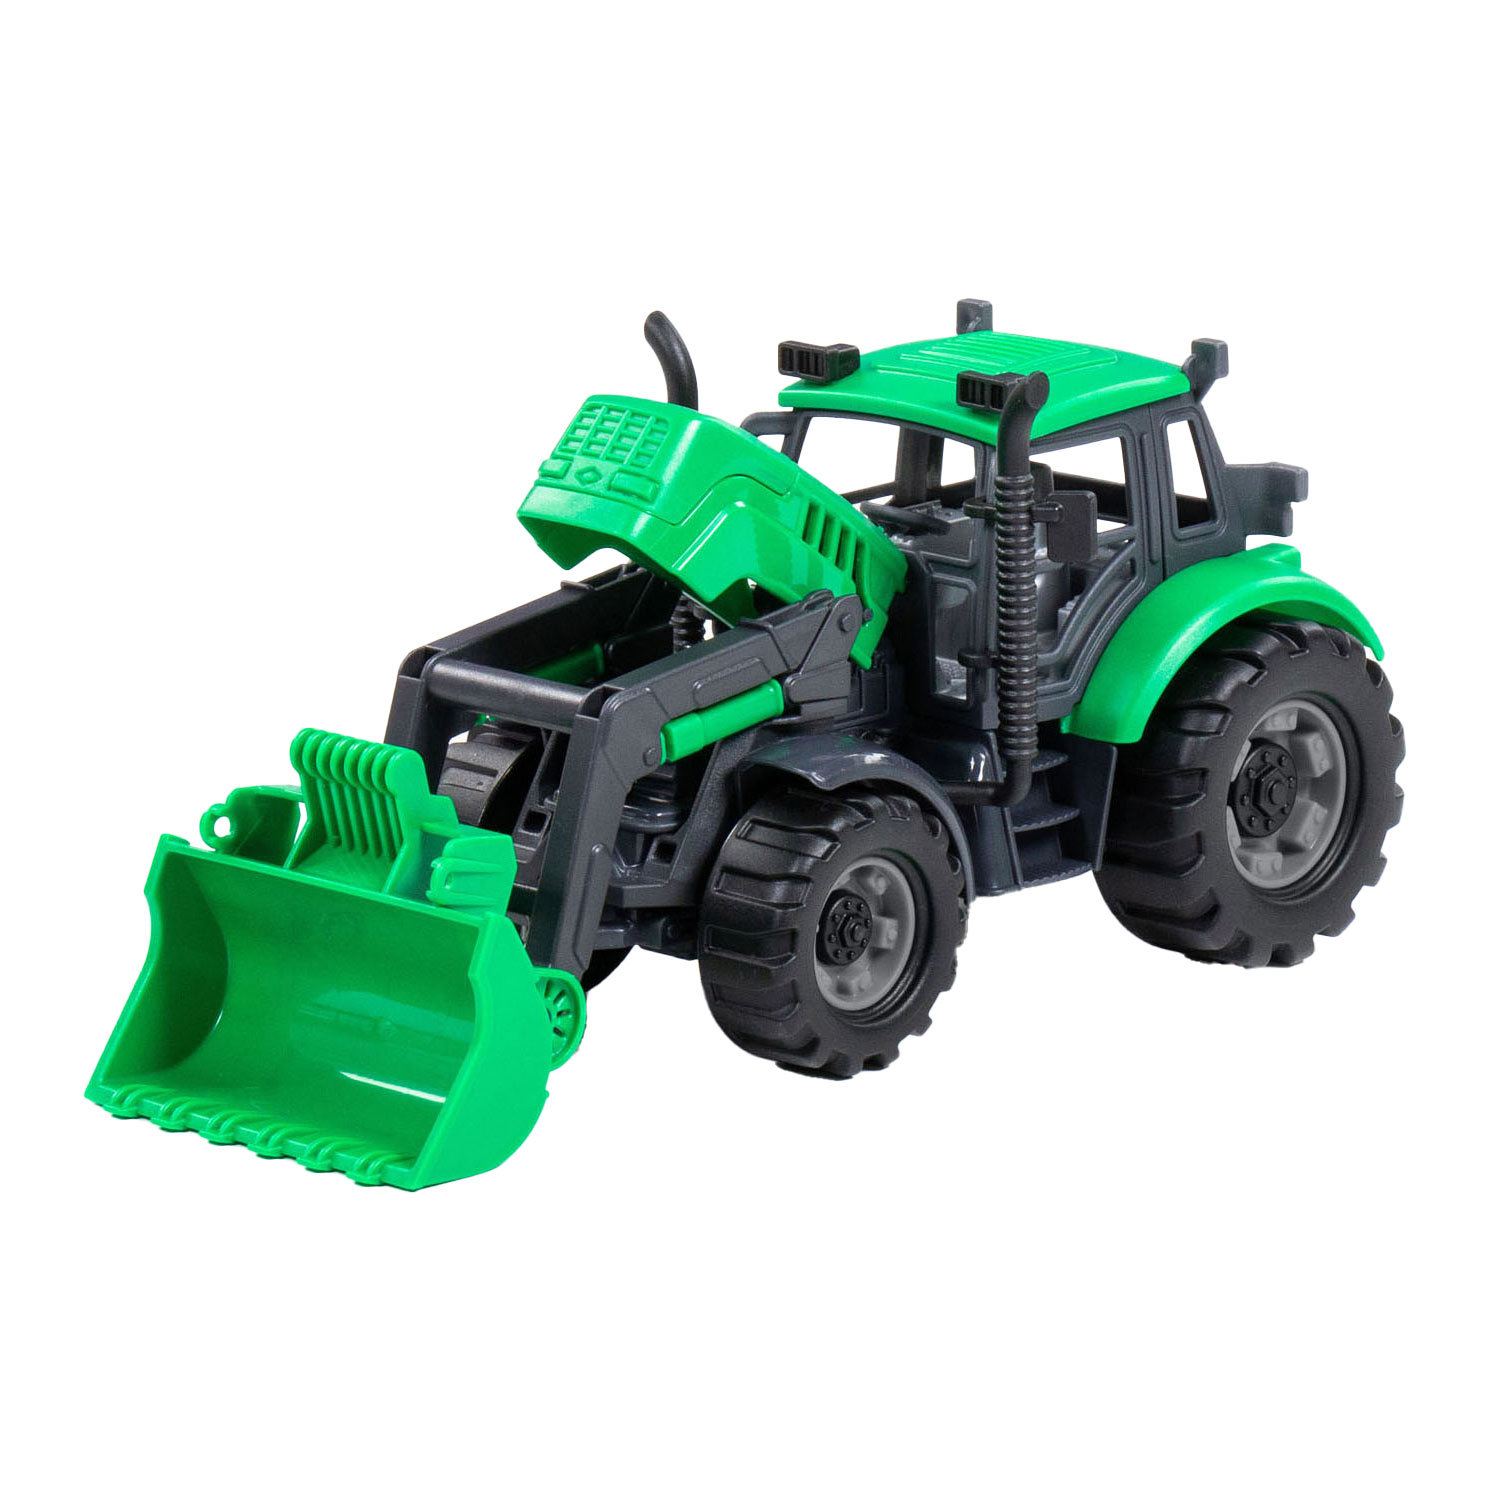 Cavallino Traktor mit Schaufel grün, Maßstab 1:32